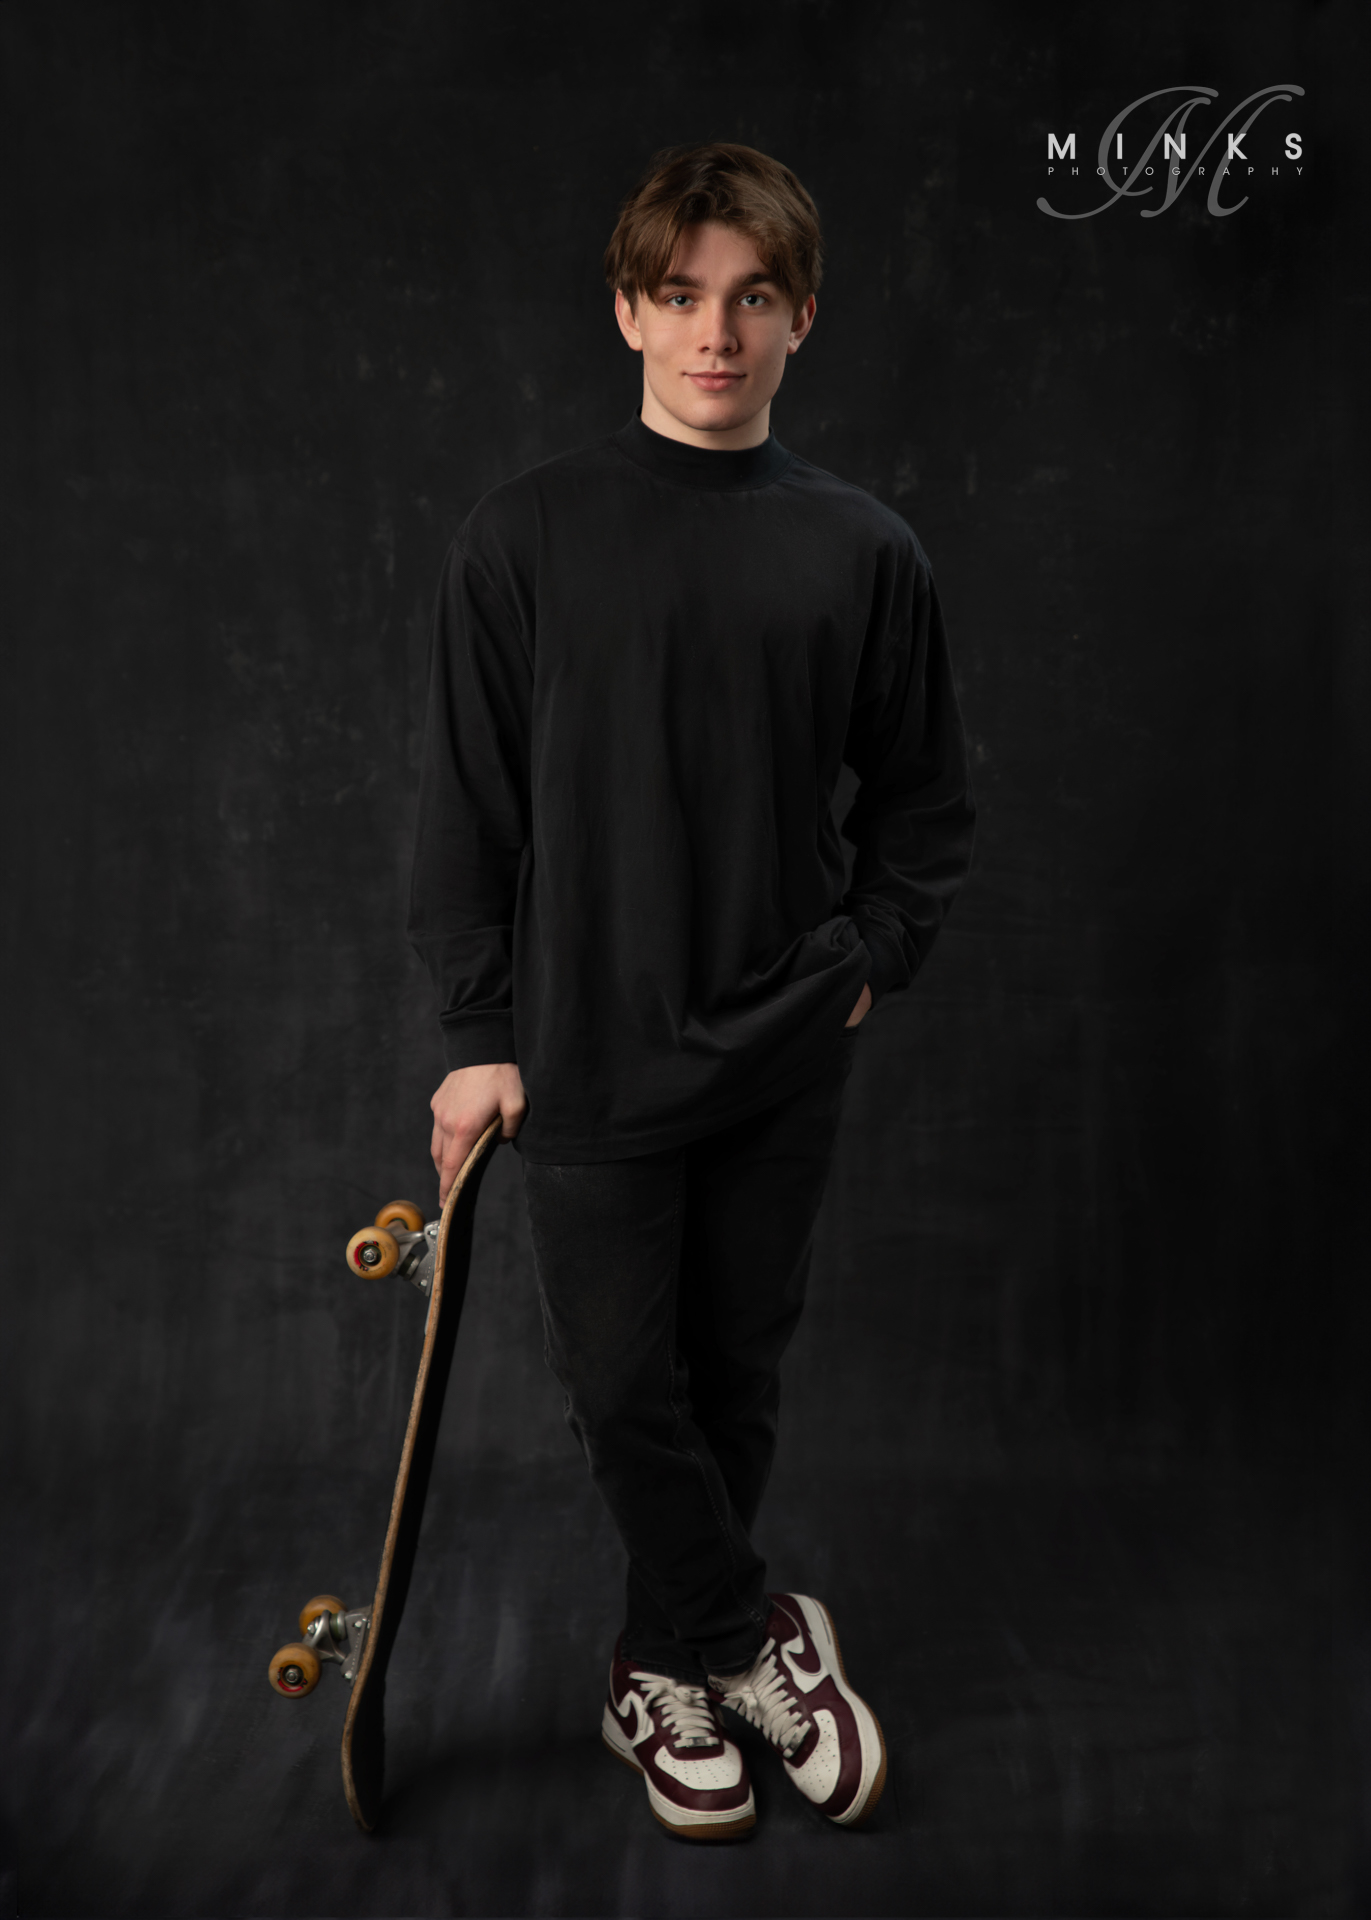 Senior Guy with skateboard